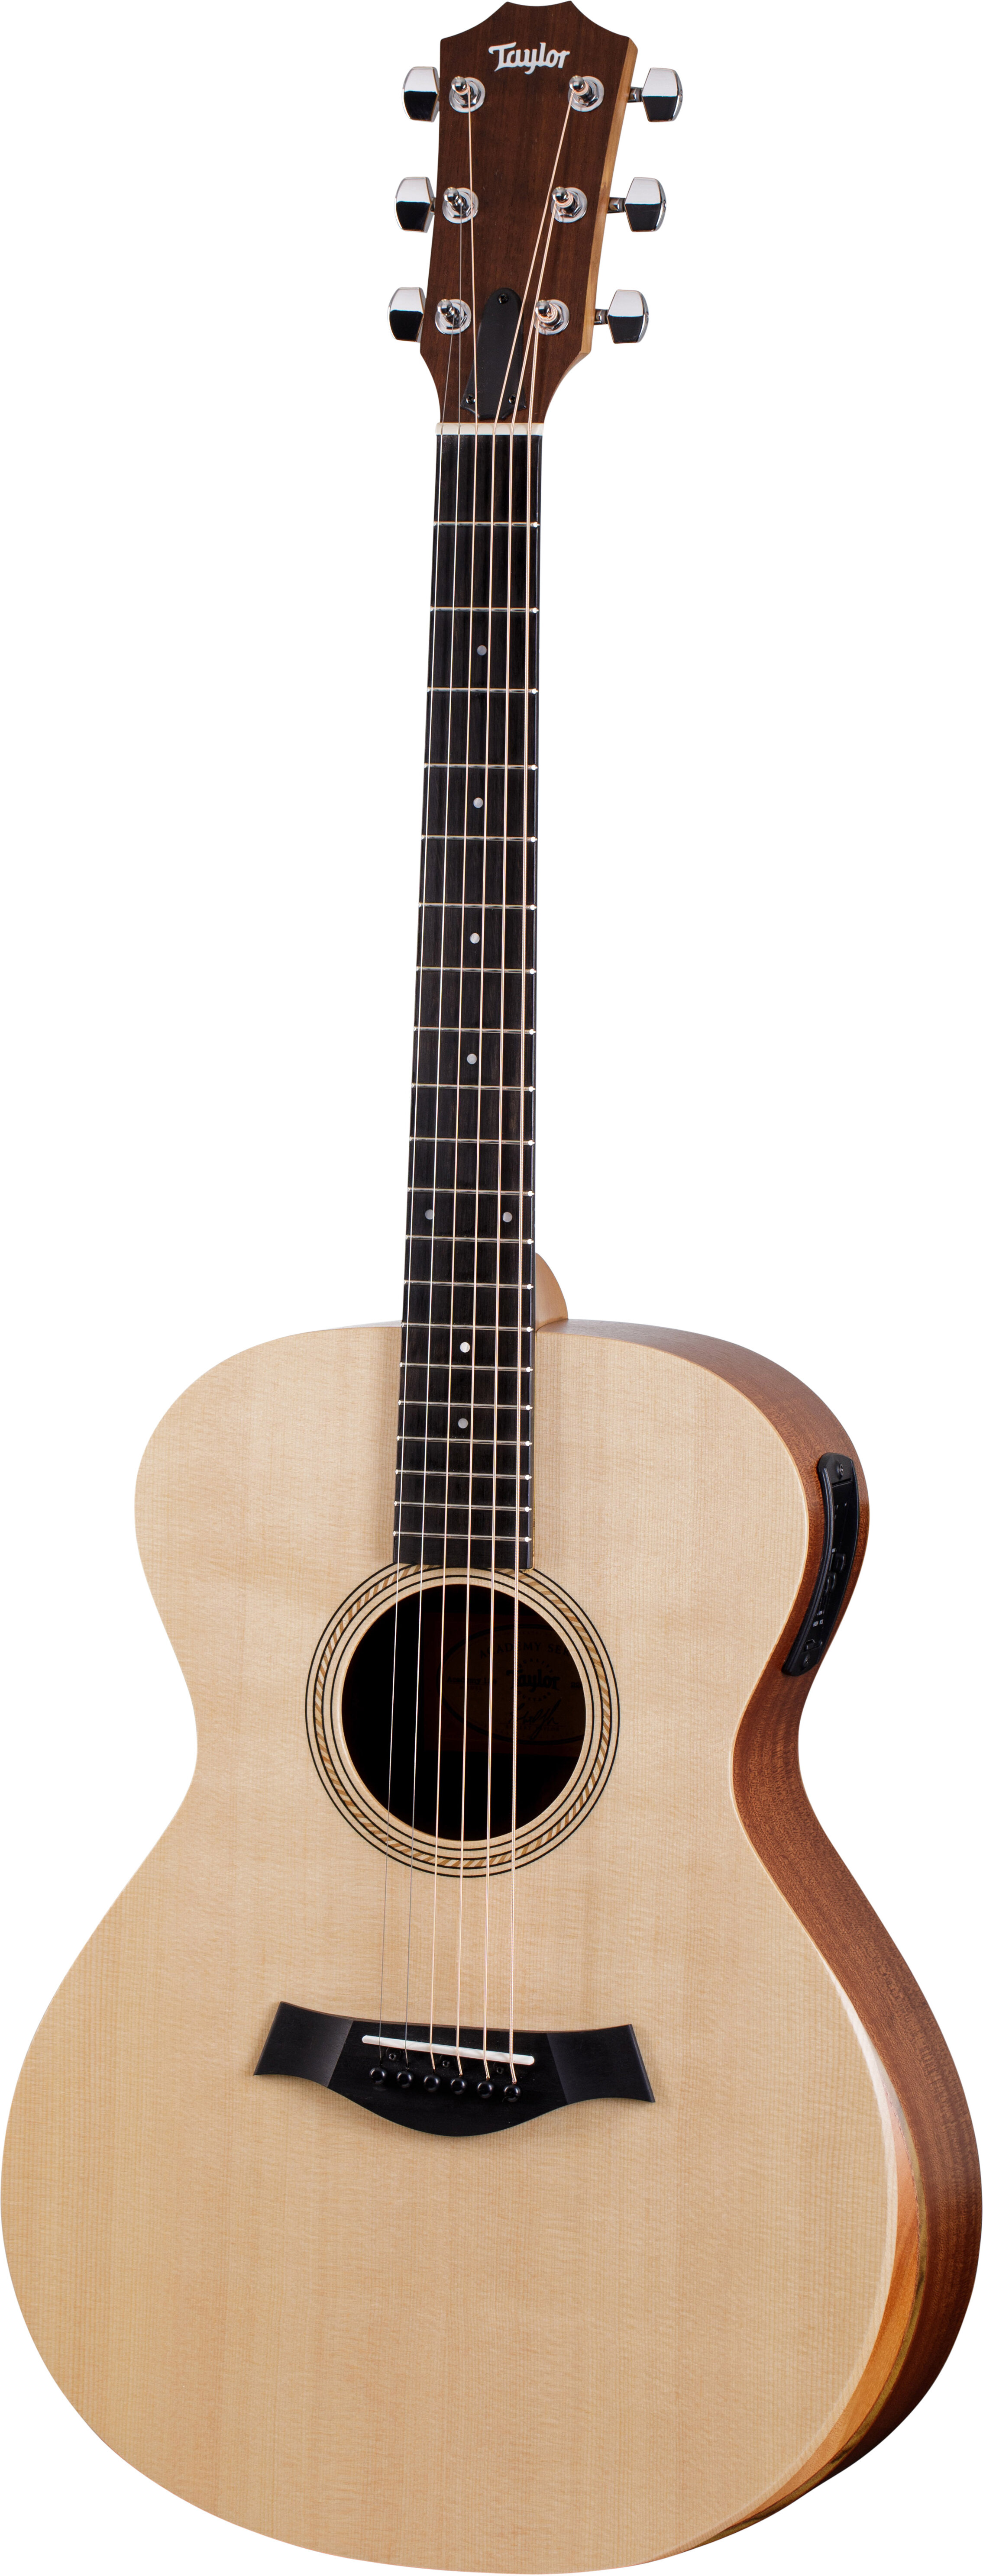 Taylor Guitars Academy12e-LH-22